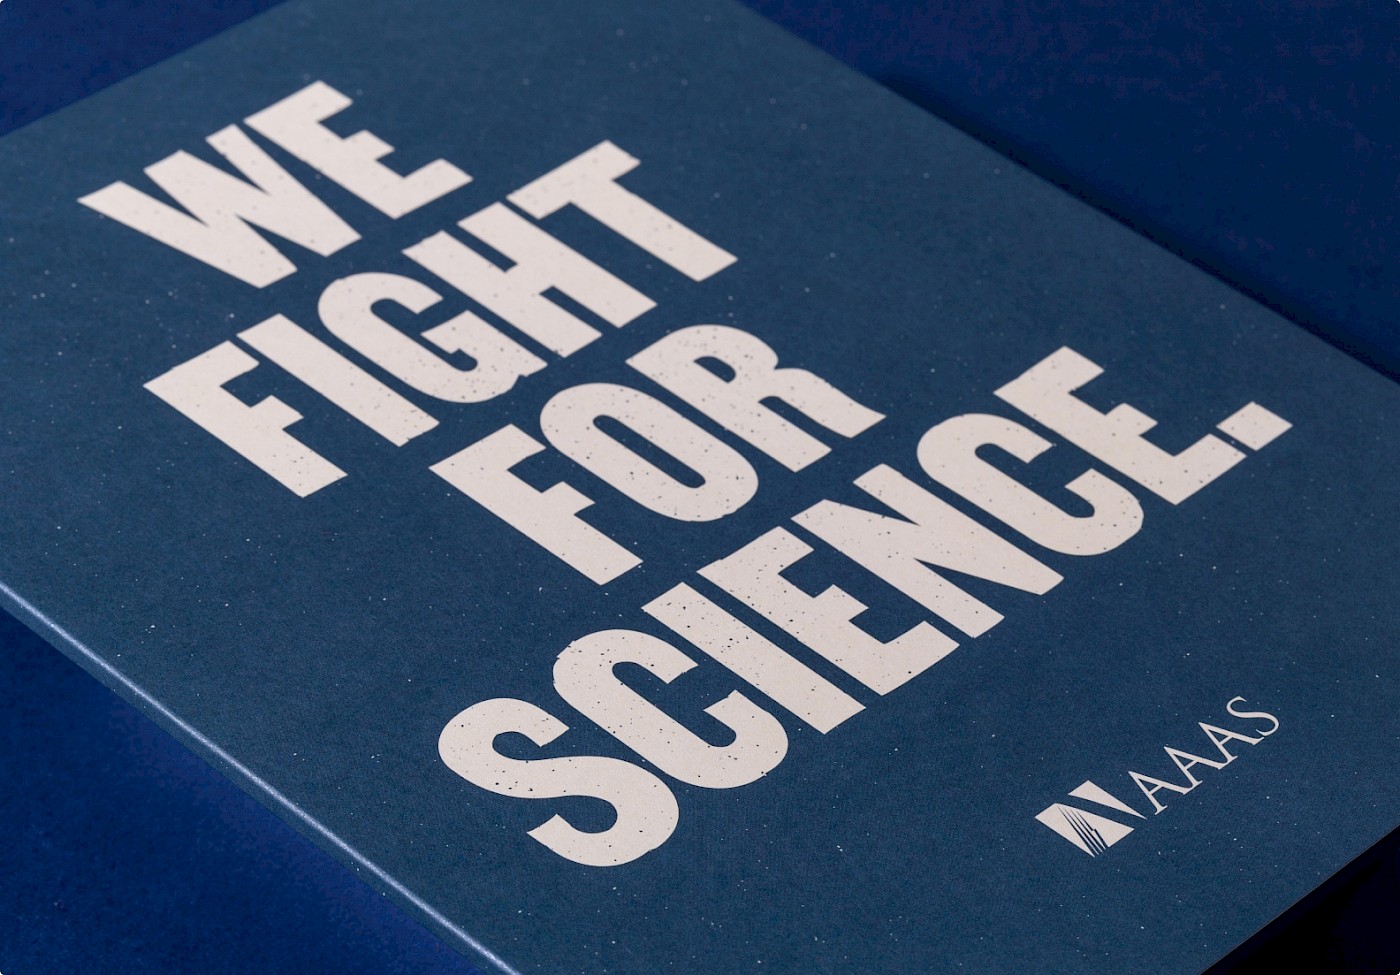 nfn-casestudy-aaas-fightforscience-02